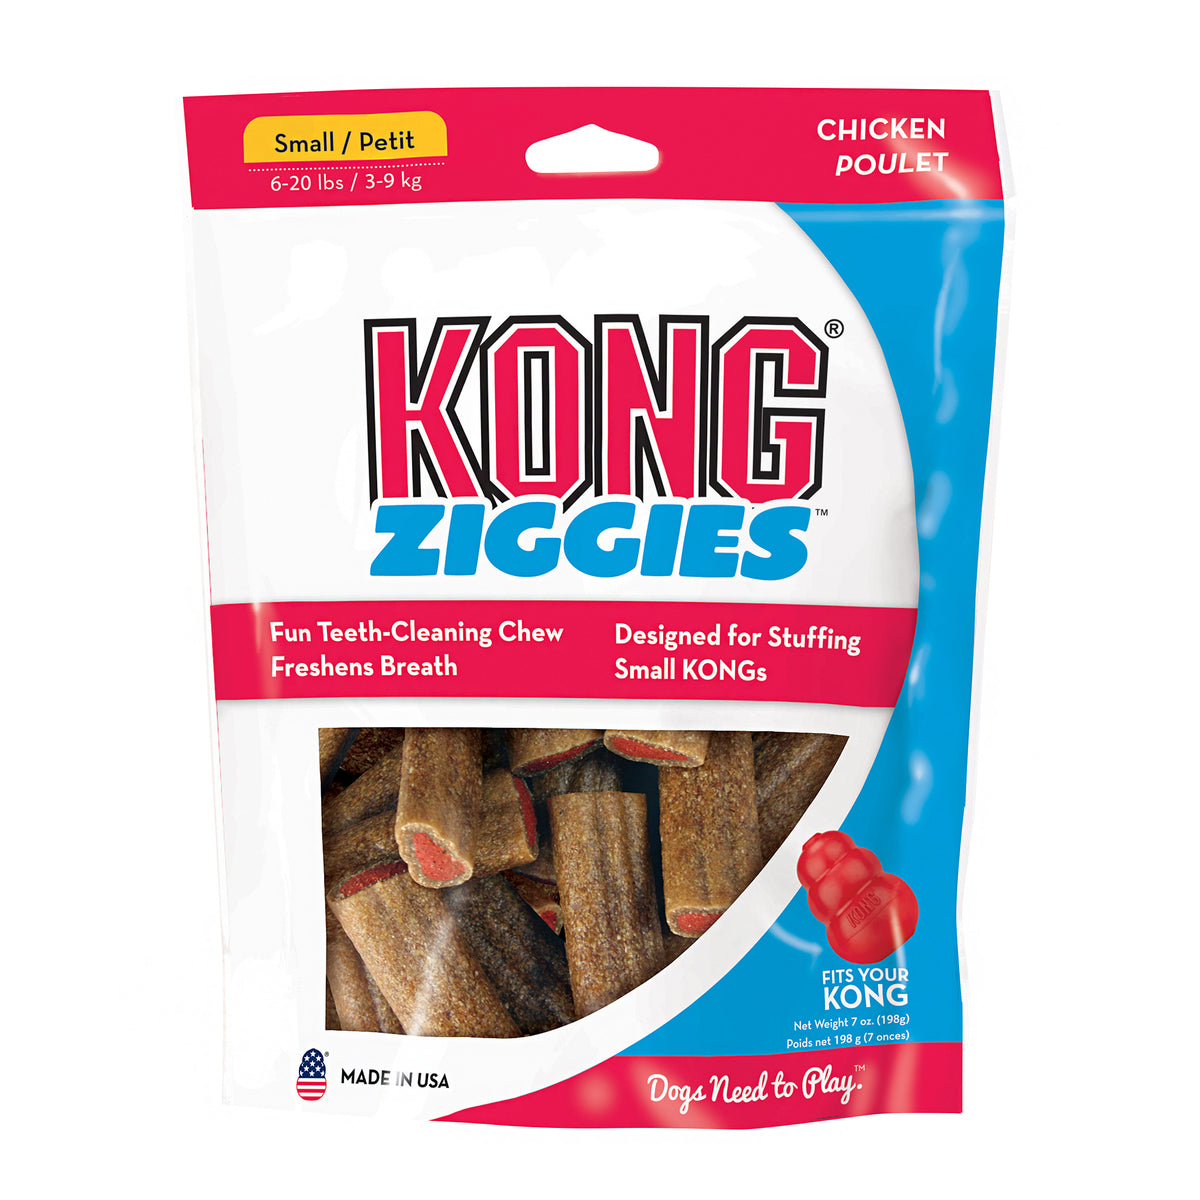 KONG Adult Ziggies Dog Treats